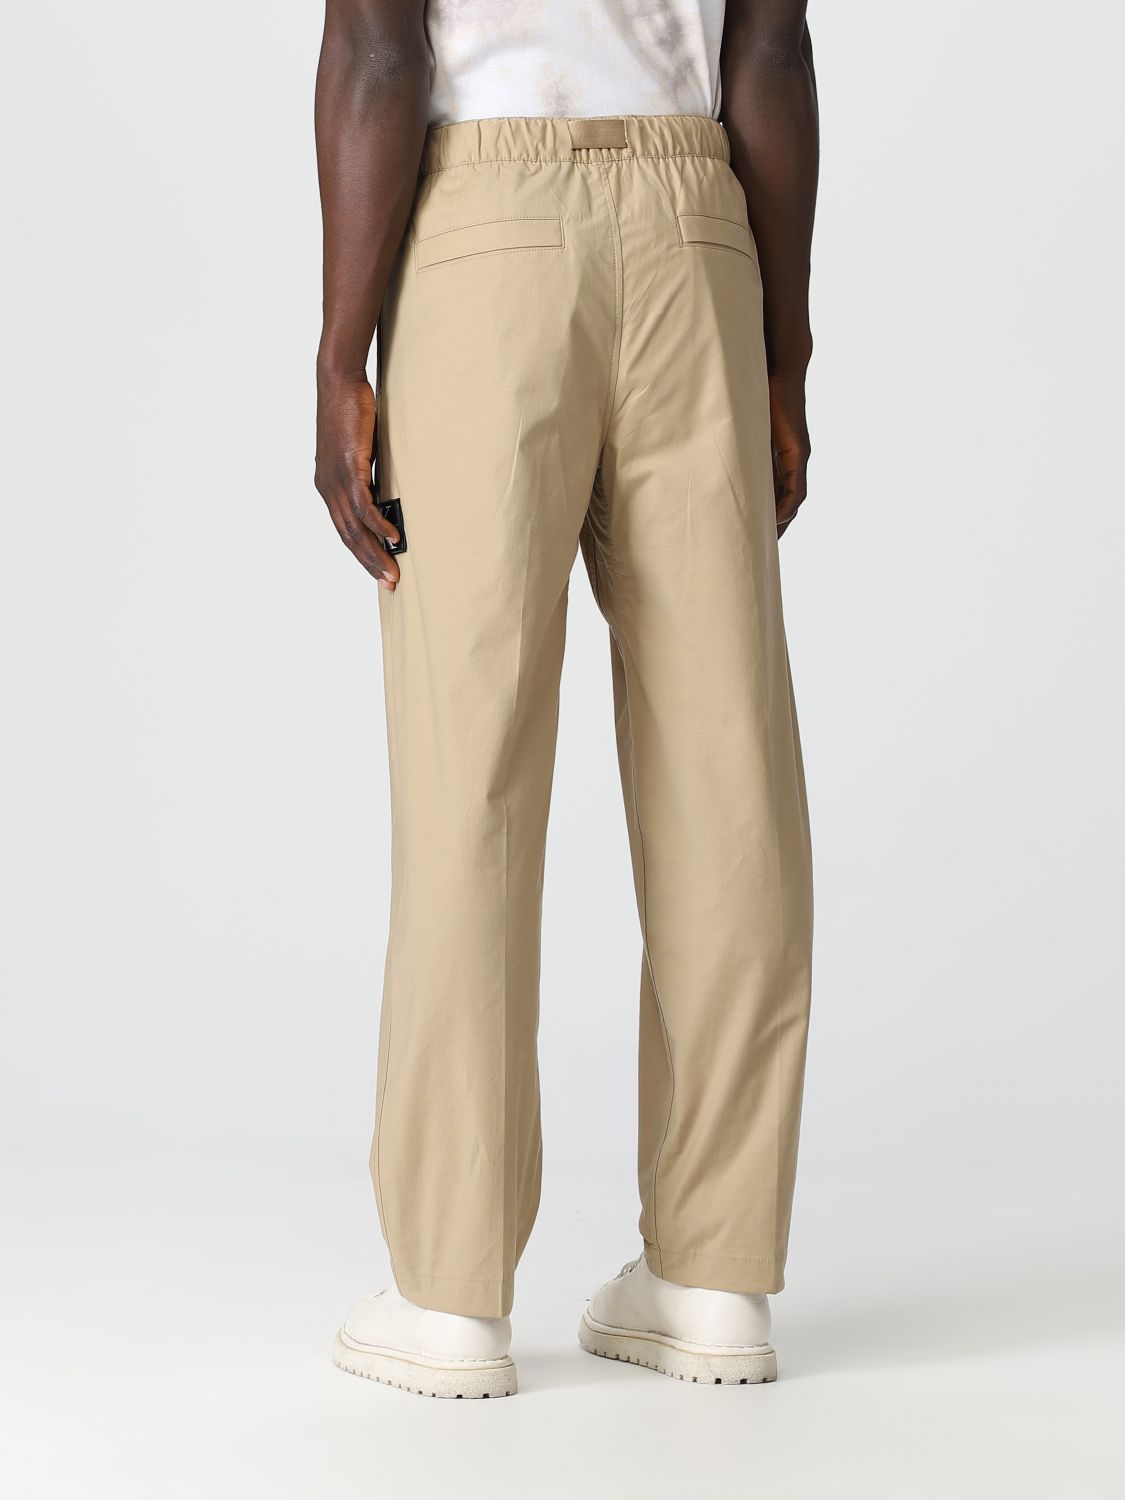 CALVIN KLEIN JEANS: pants for man - Beige | Calvin Klein Jeans pants ...